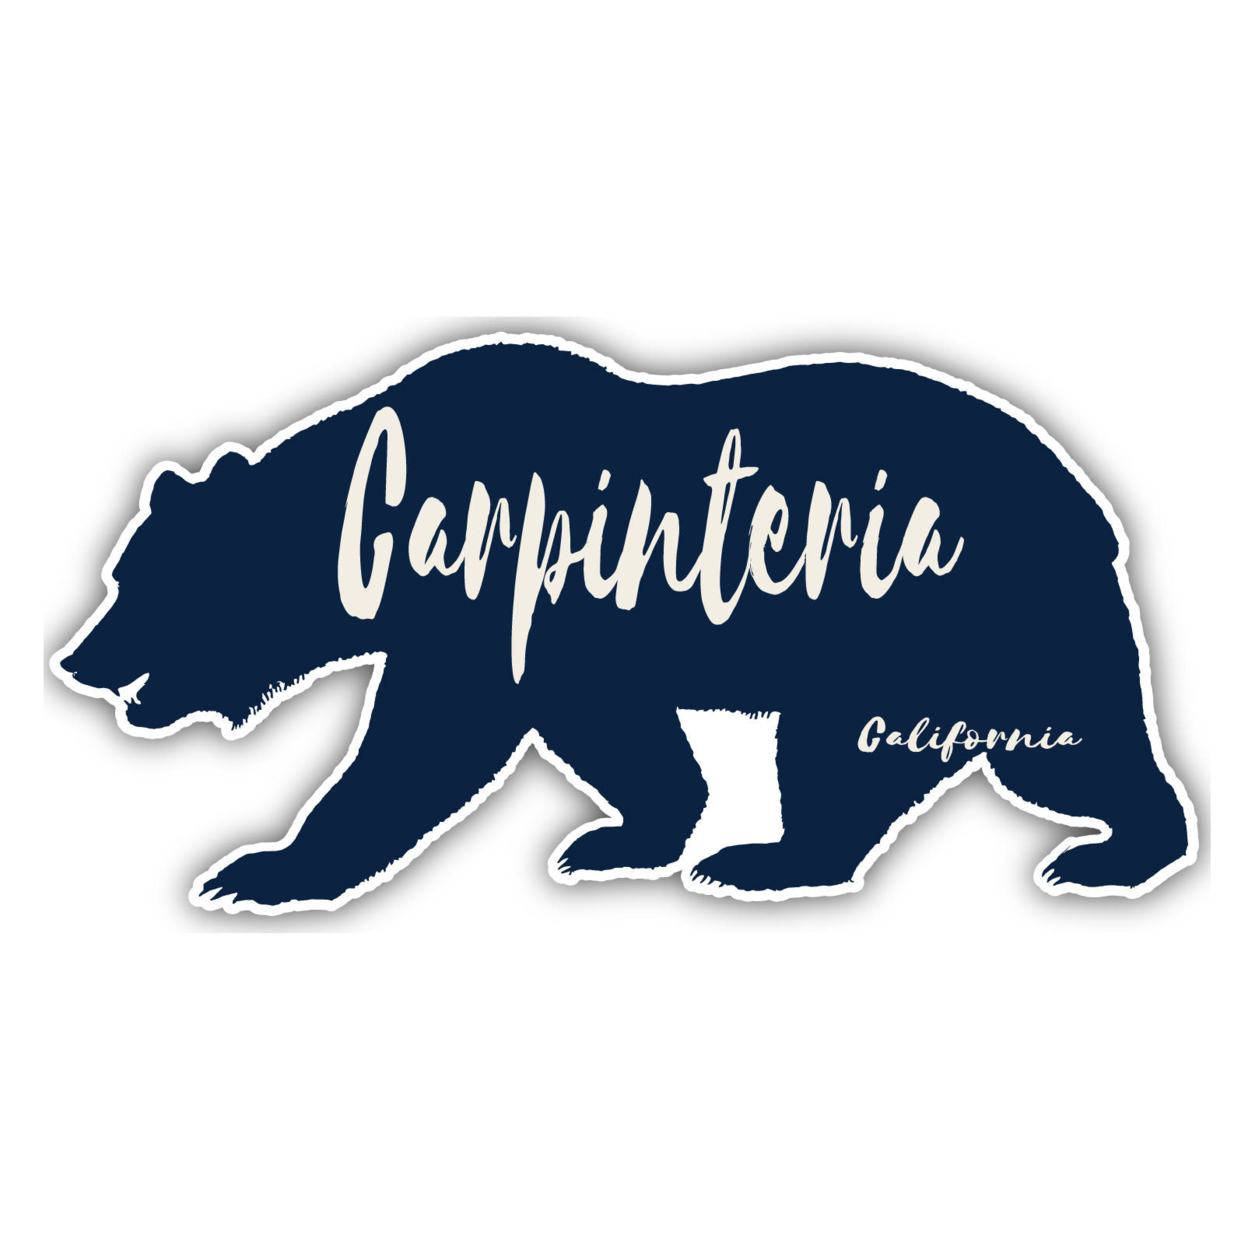 Carpinteria California Souvenir Decorative Stickers (Choose Theme And Size) - Single Unit, 12-Inch, Bear